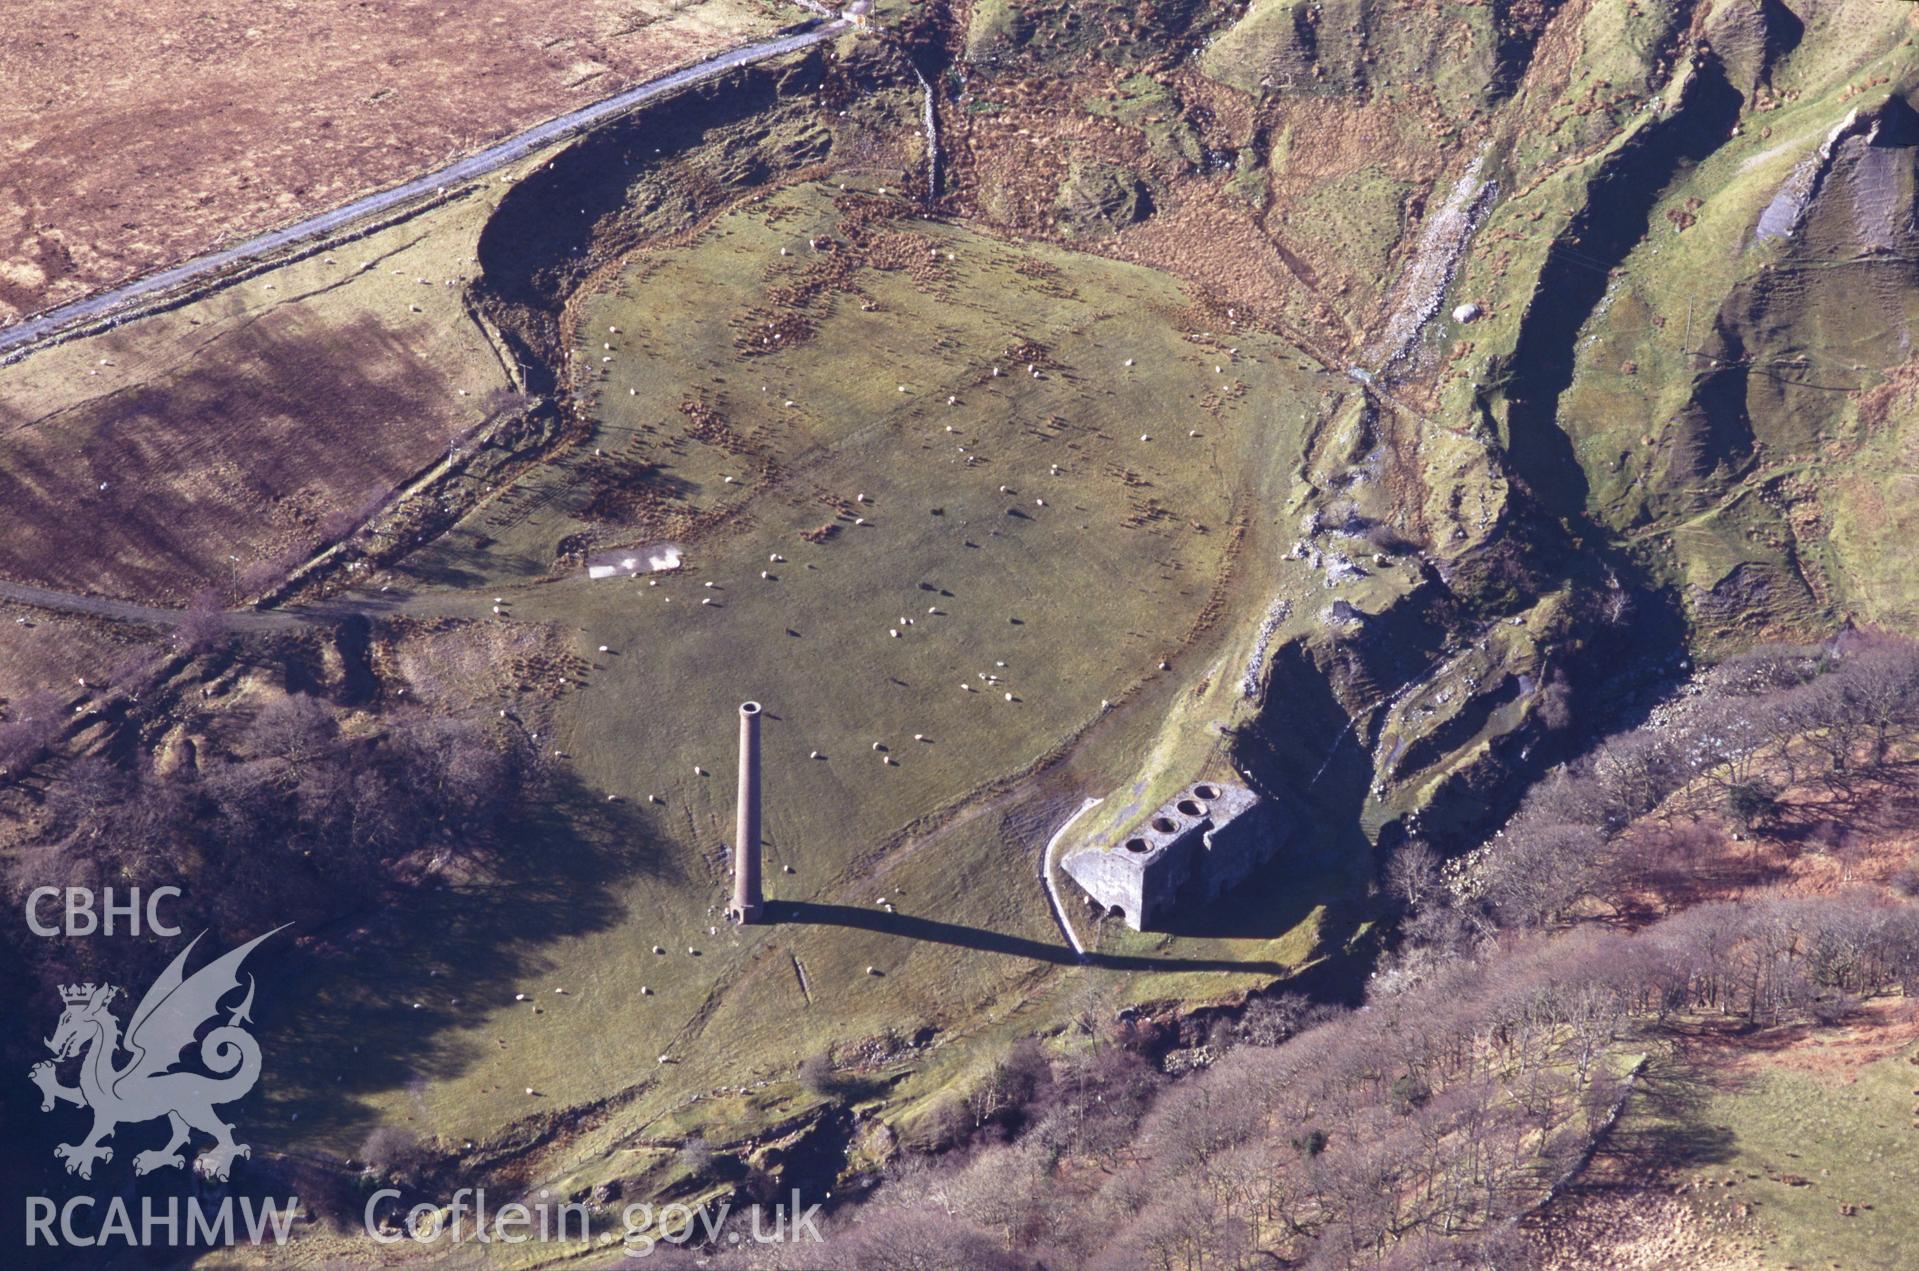 Slide of RCAHMW colour oblique aerial photograph of Henllys Vale Coal Mine & Quarry, taken by C.R. Musson, 29/3/1995.